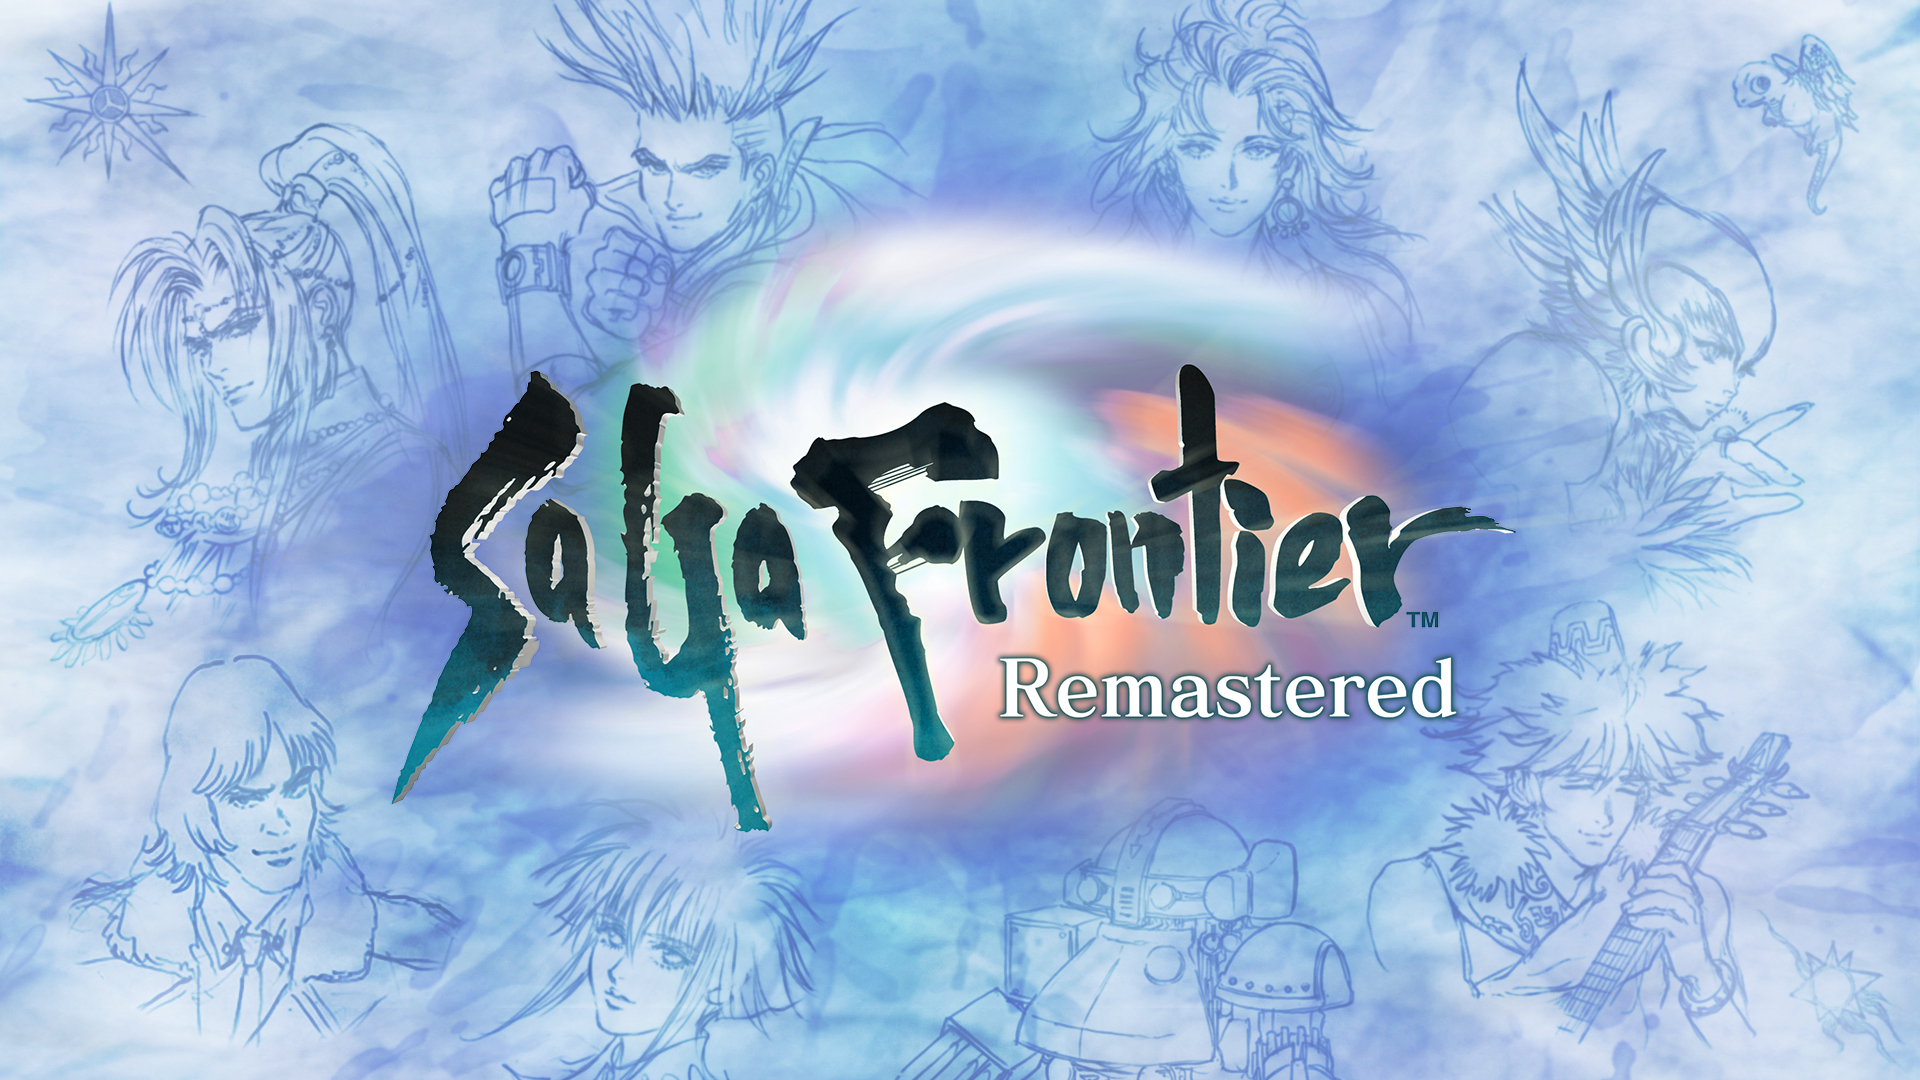 saga frontier remastered pre order